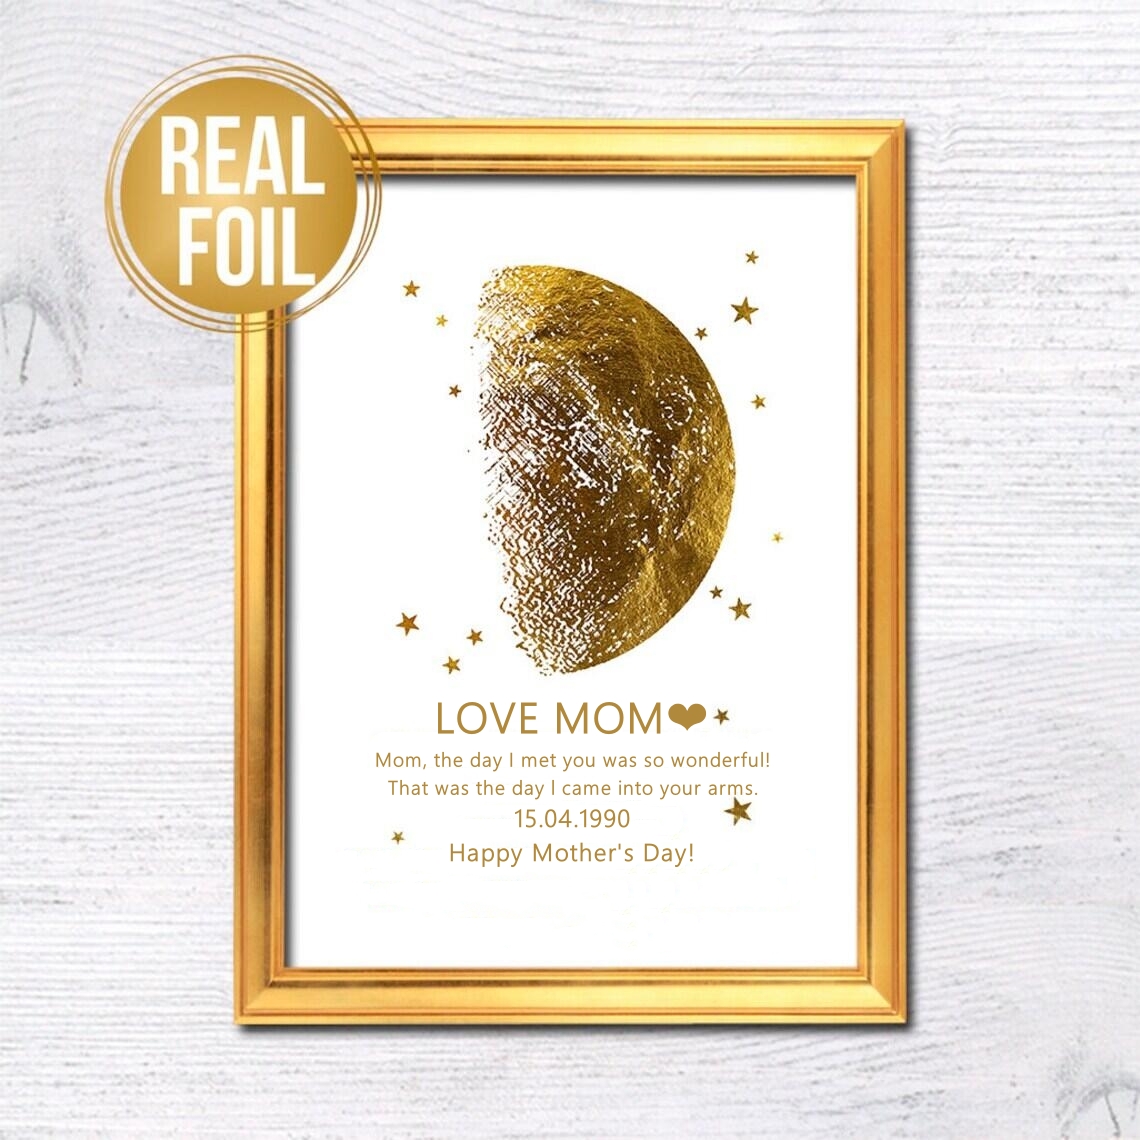 Custom Art Frame/ REAL MOON PHASE - Mother's Day Gift